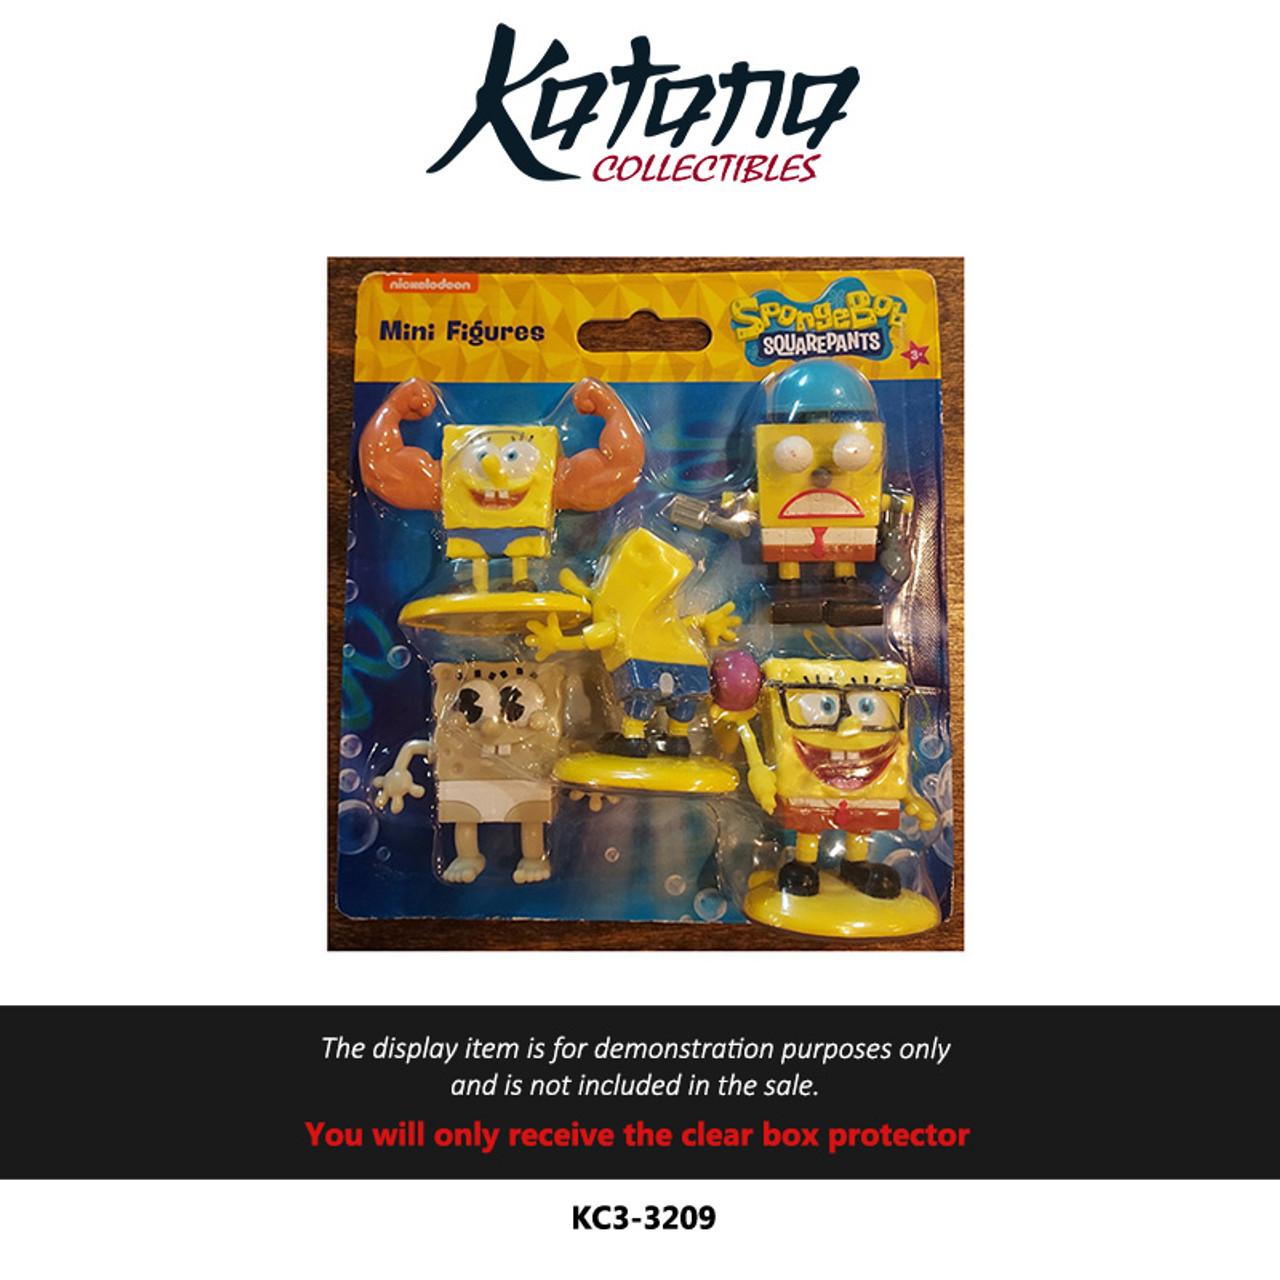 Katana Collectibles Protector For Spongebob Mini Figures